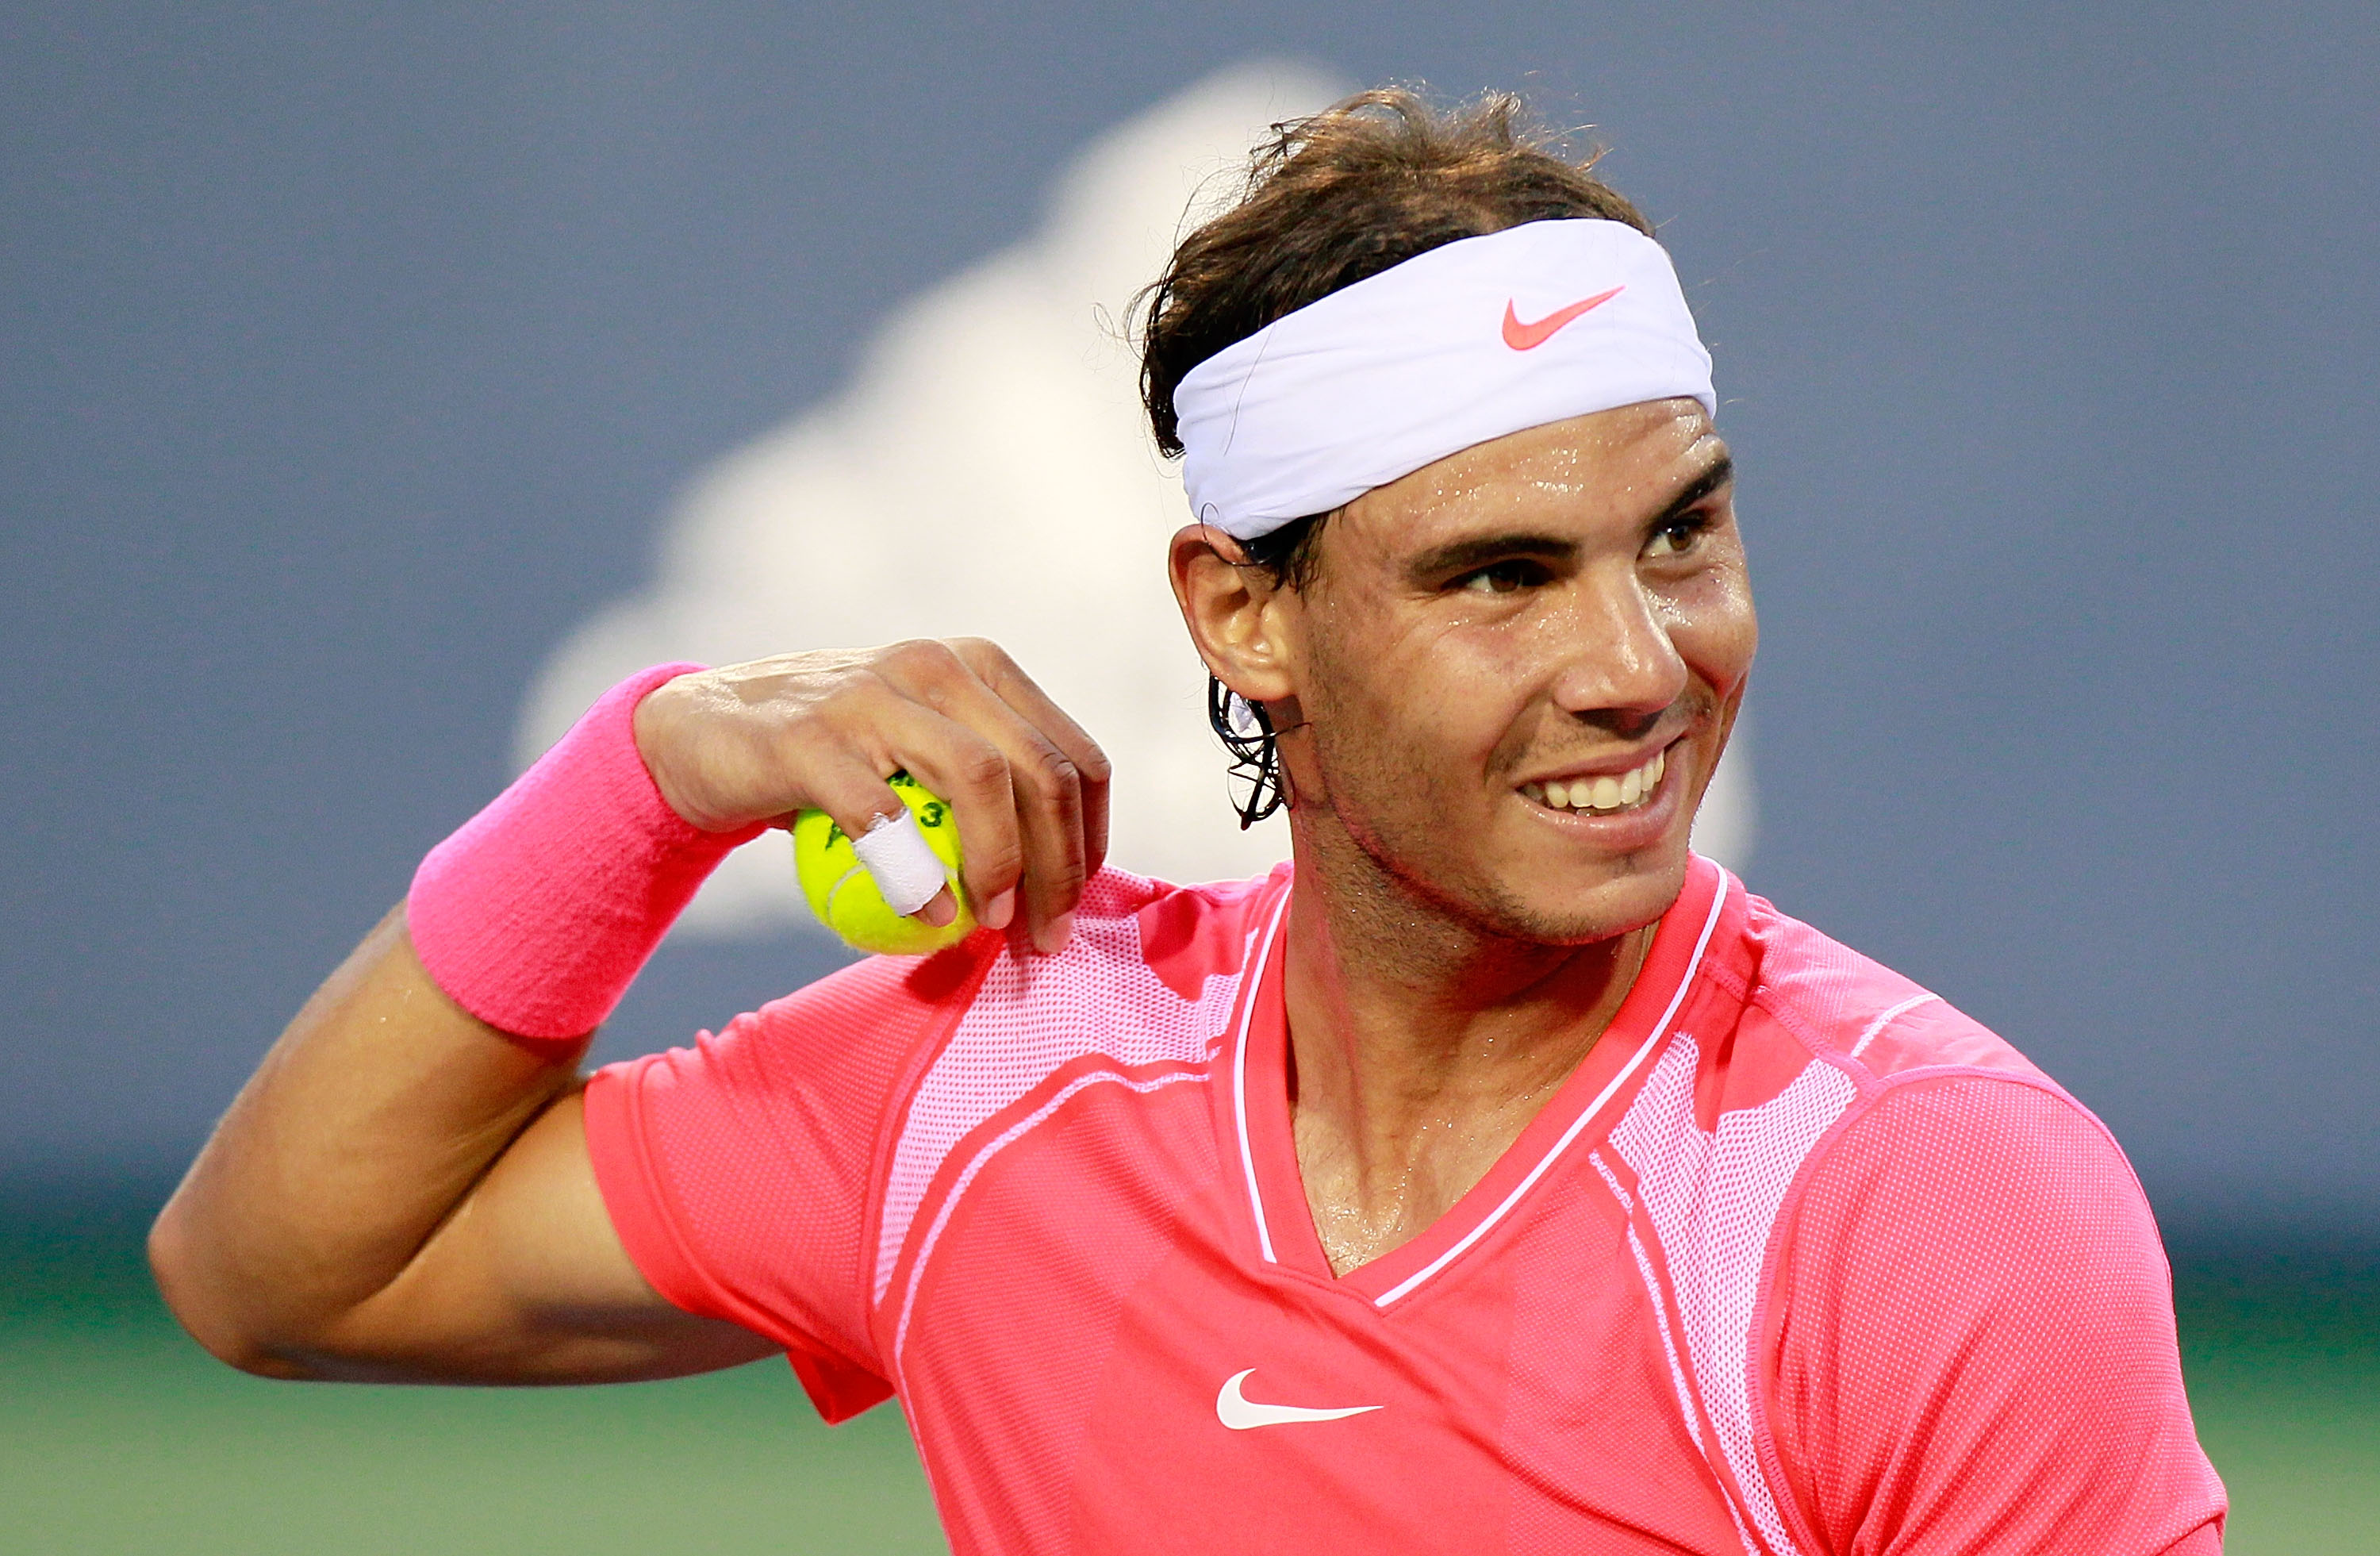 U.S. Open 2010 10 Reasons Why Rafael Nadal Will Never Win the U.S